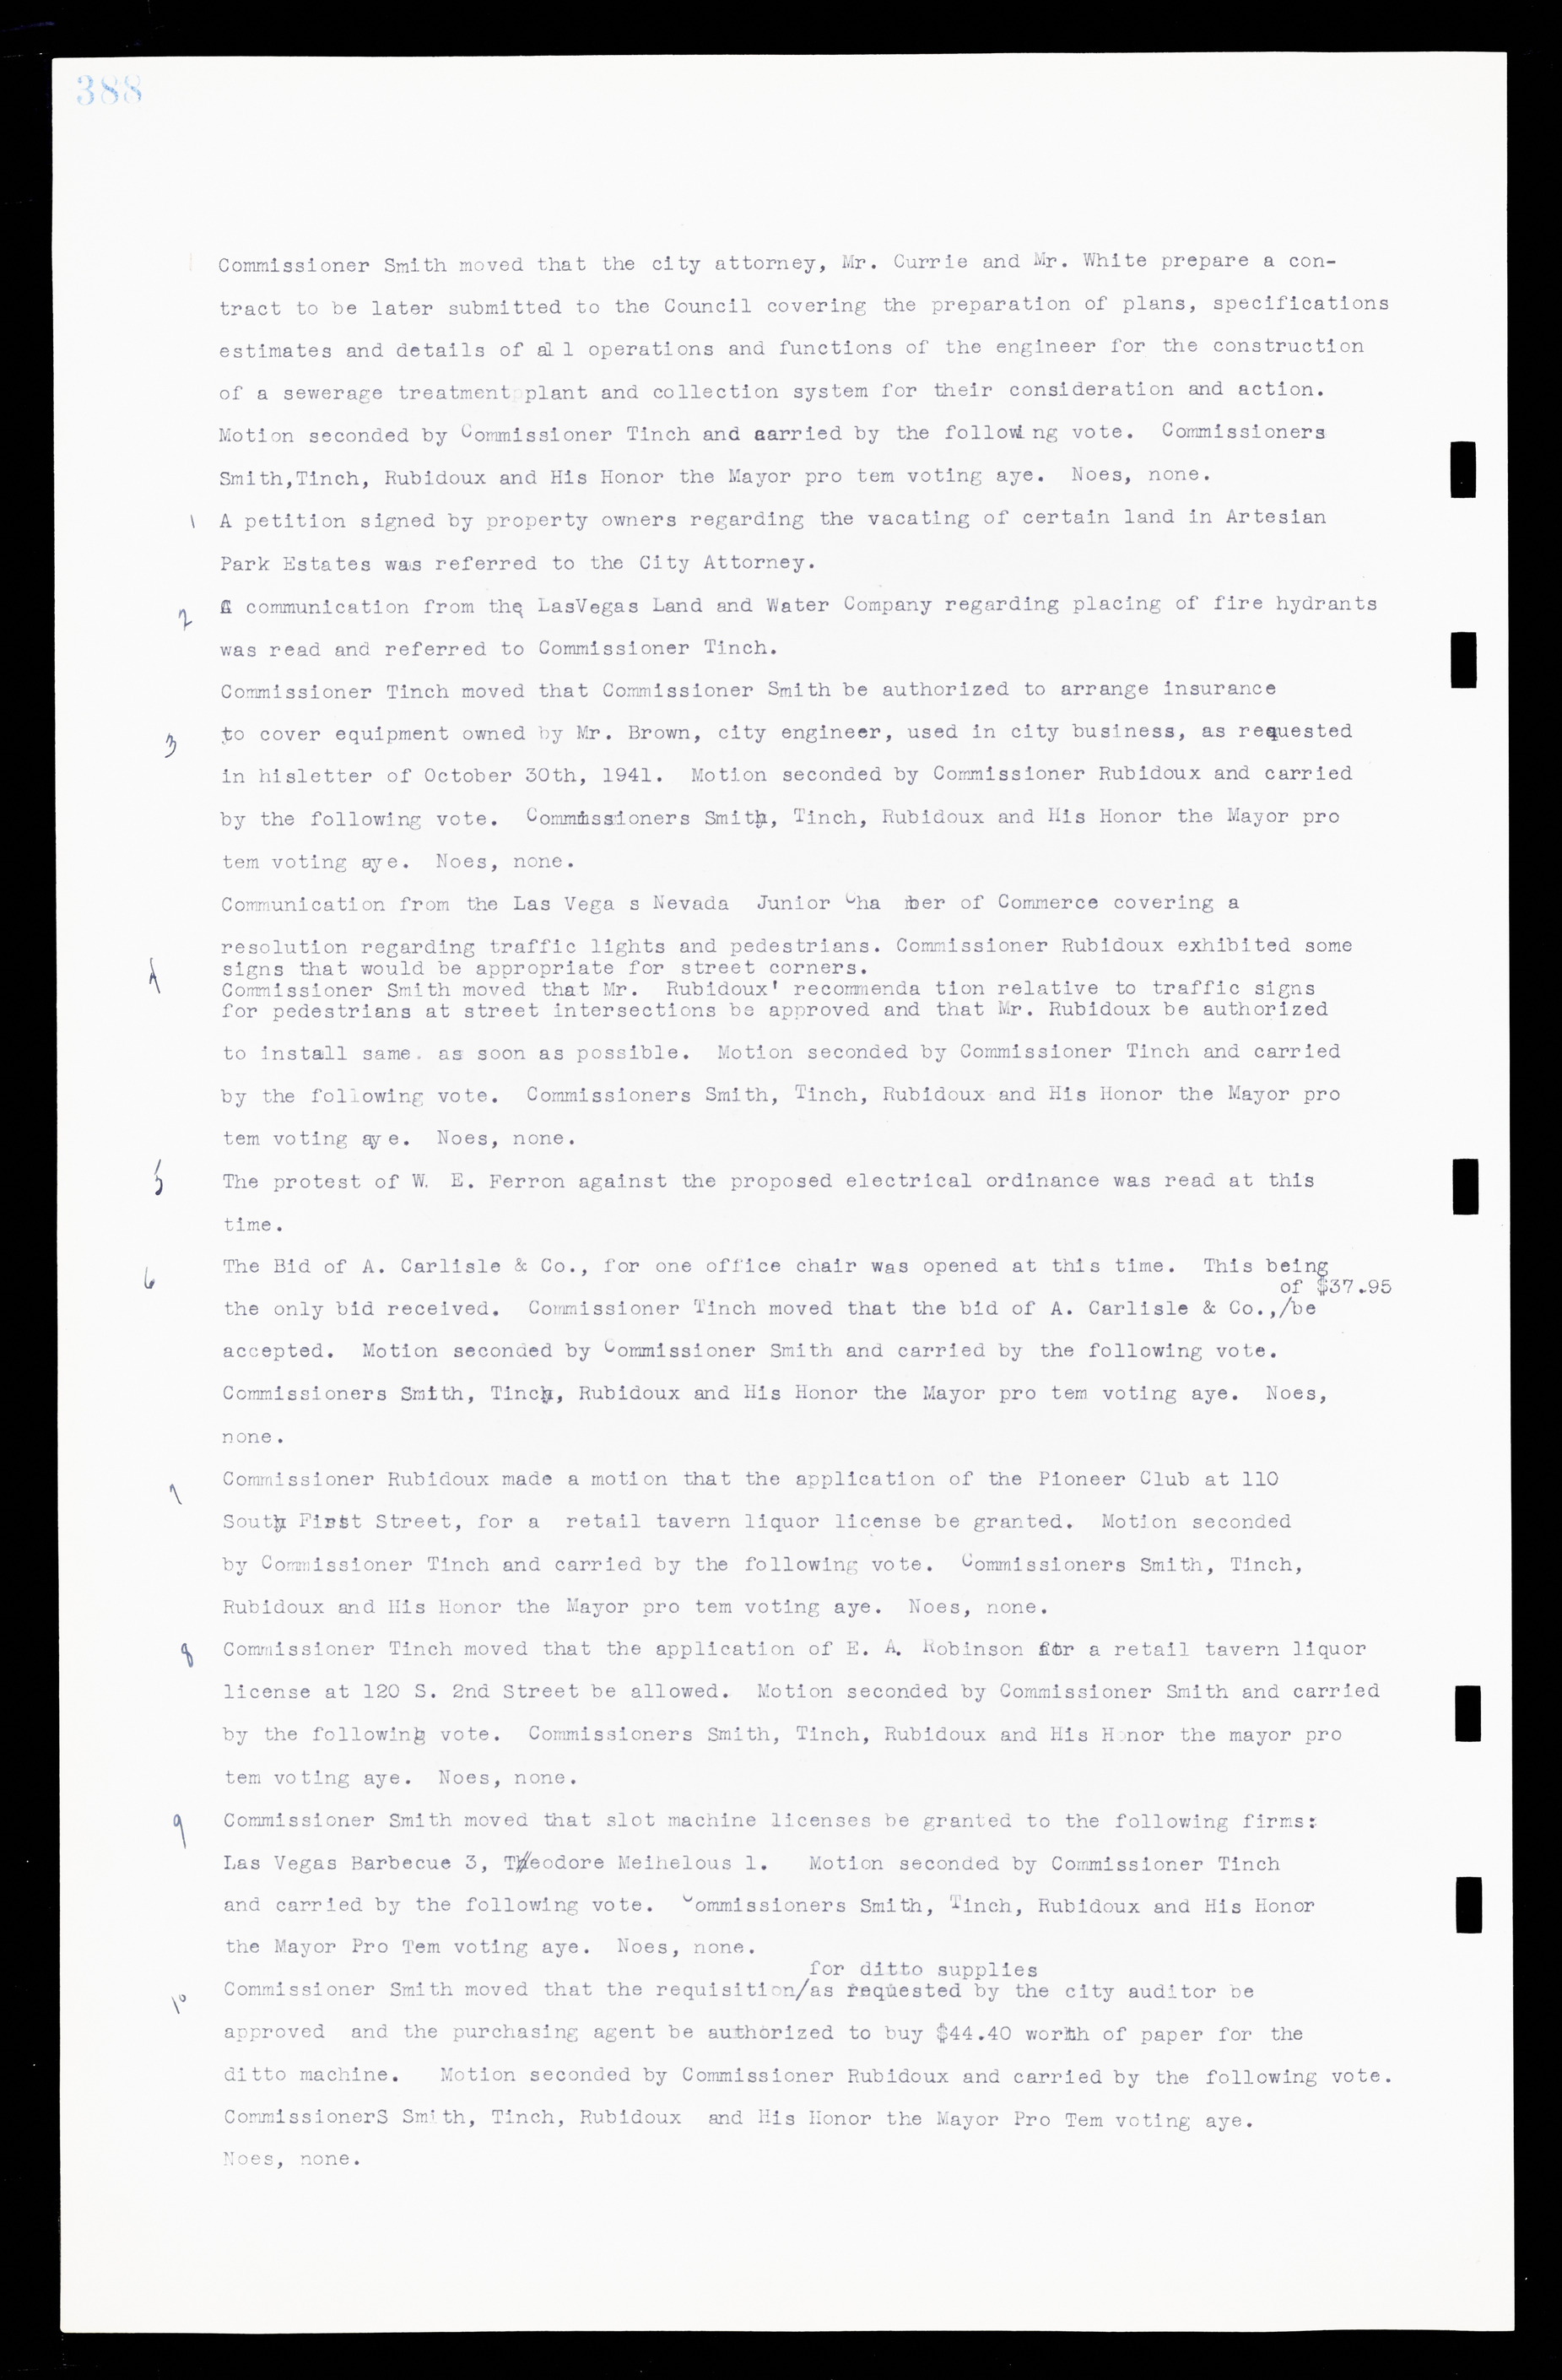 Las Vegas City Commission Minutes, February 17, 1937 to August 4, 1942, lvc000004-414